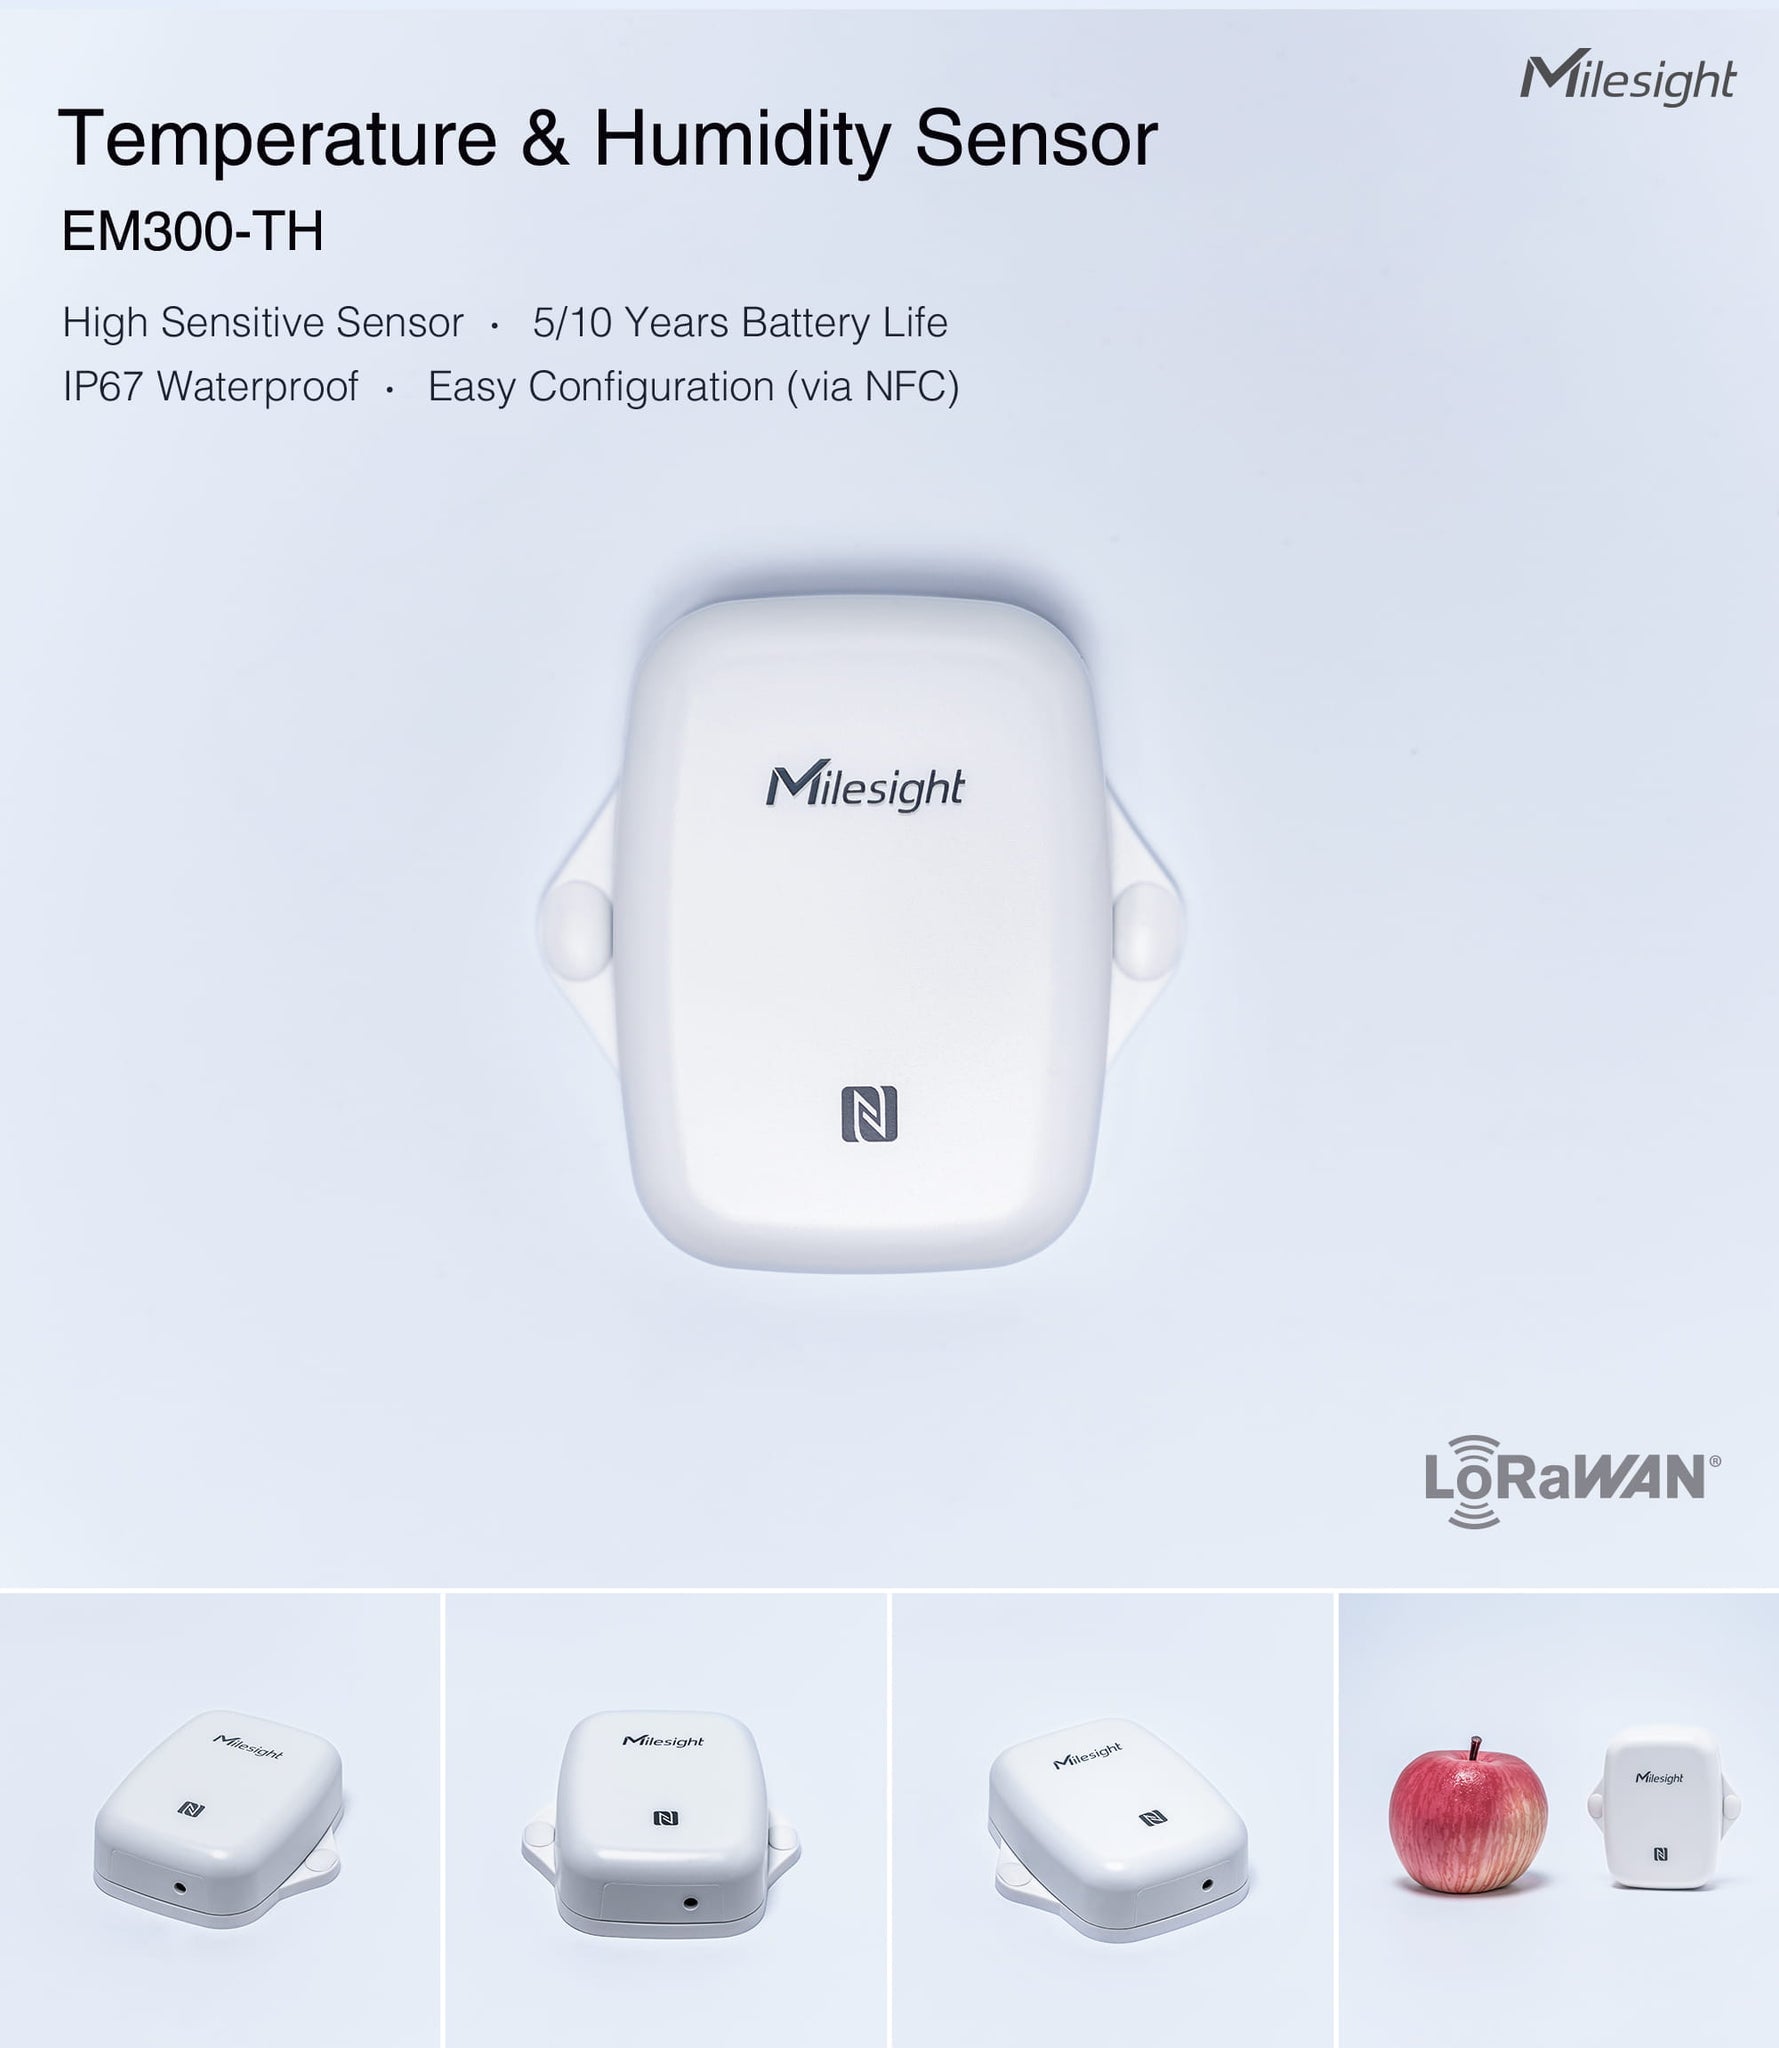 Milesight Temperature and Humidity Sensor EM300-TH